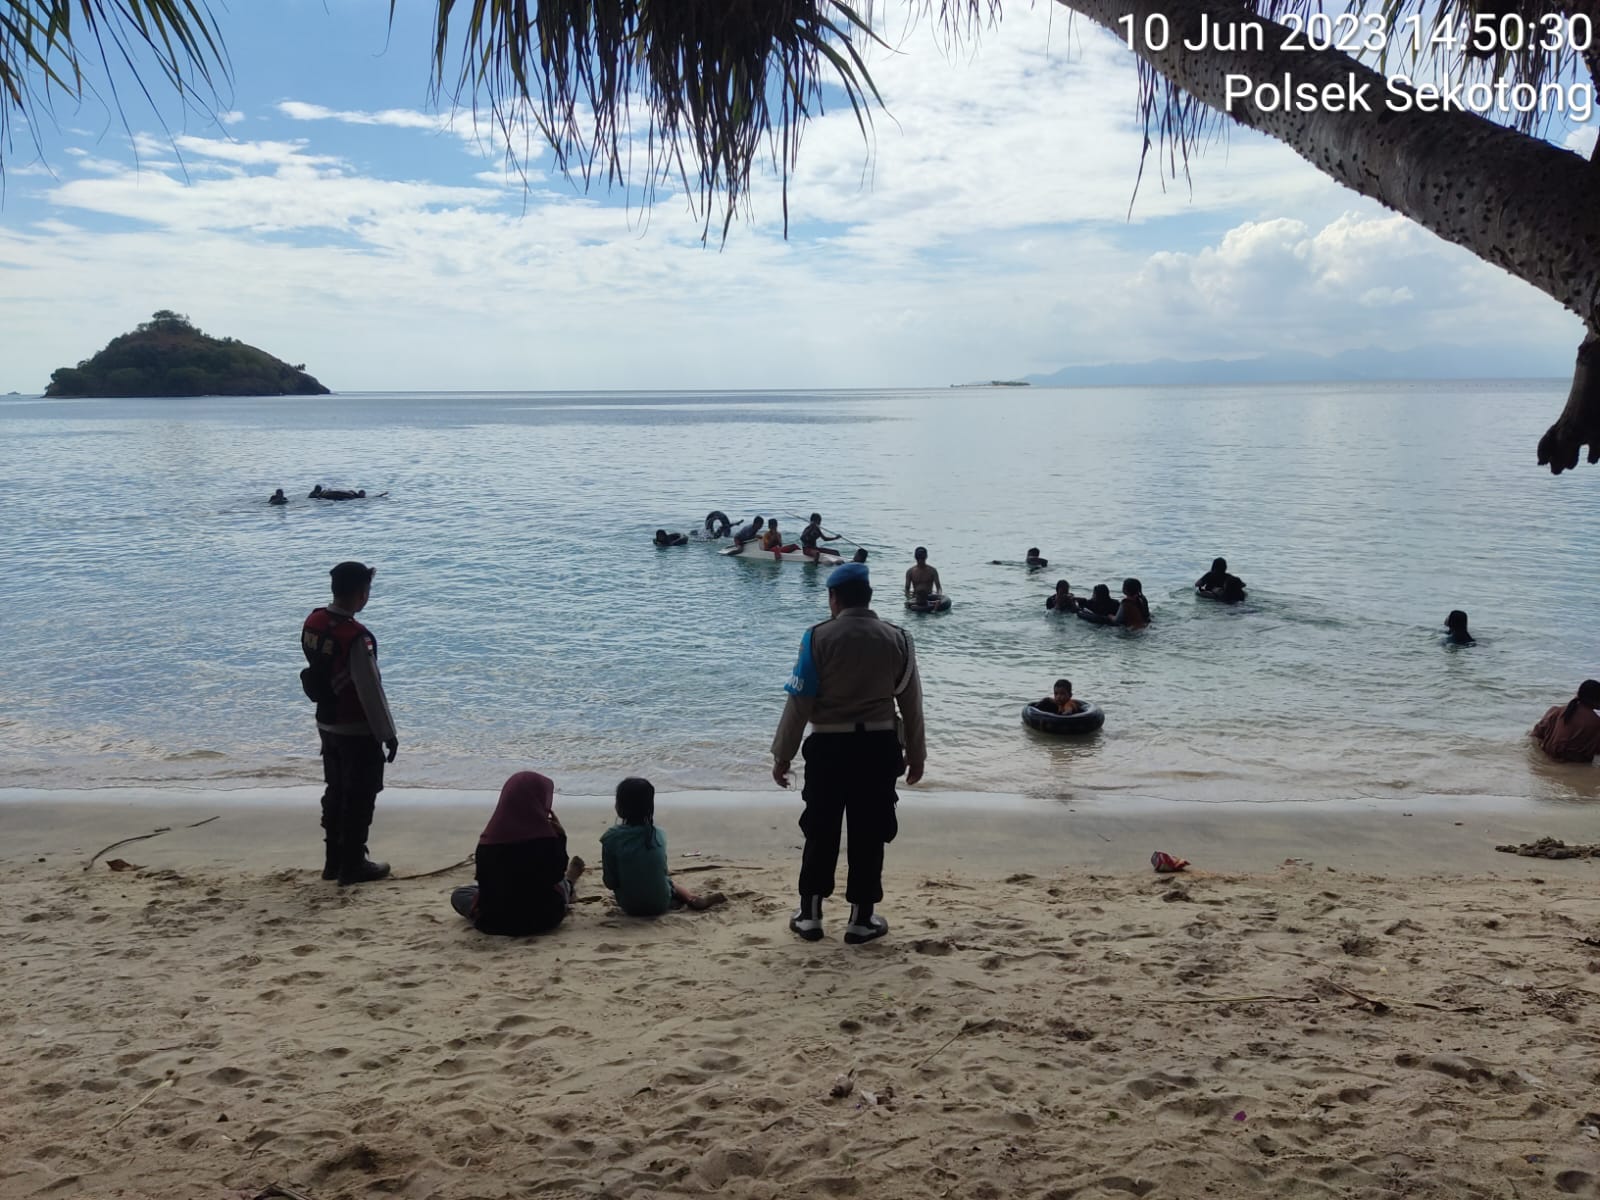 Patroli Rutin dan Pemantauan Wilayah Polsek Sekotong, Sambangi Lokasi Wisata